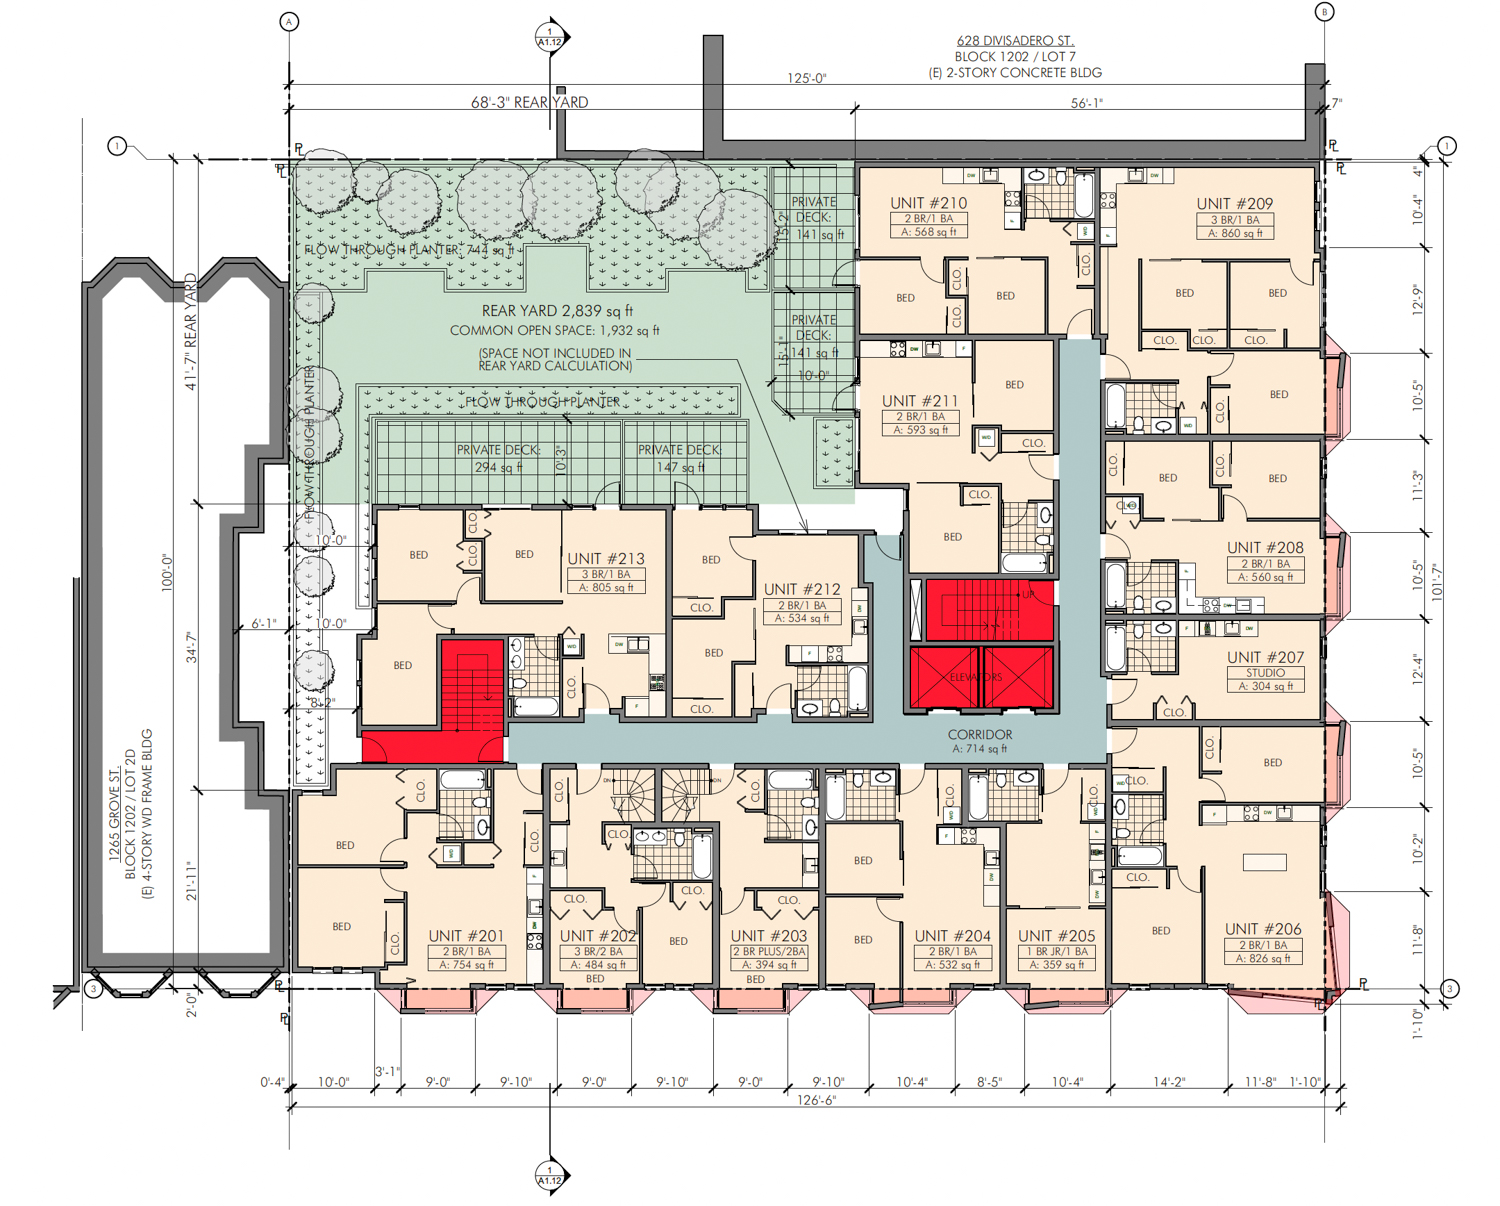 650 Divisadero Street second-level floor plan, elevation by Ankrom Moisan Architects